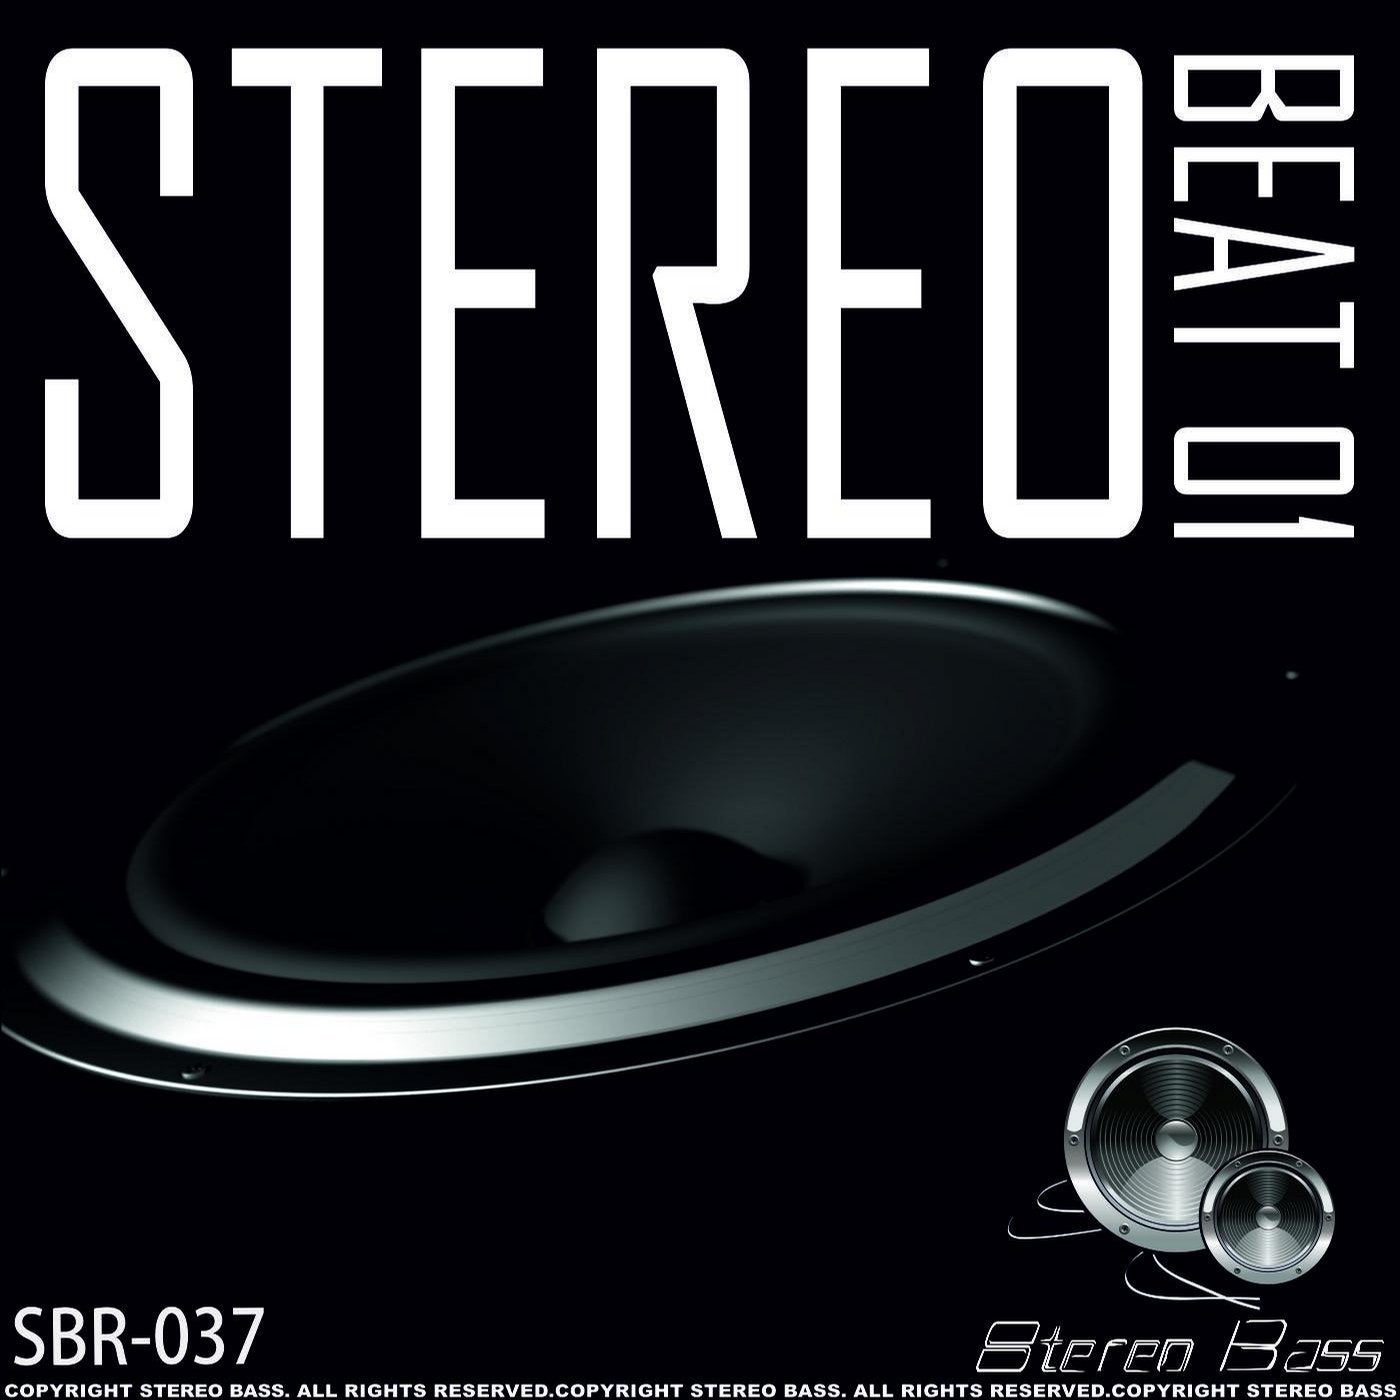 STEREO BEAT 01